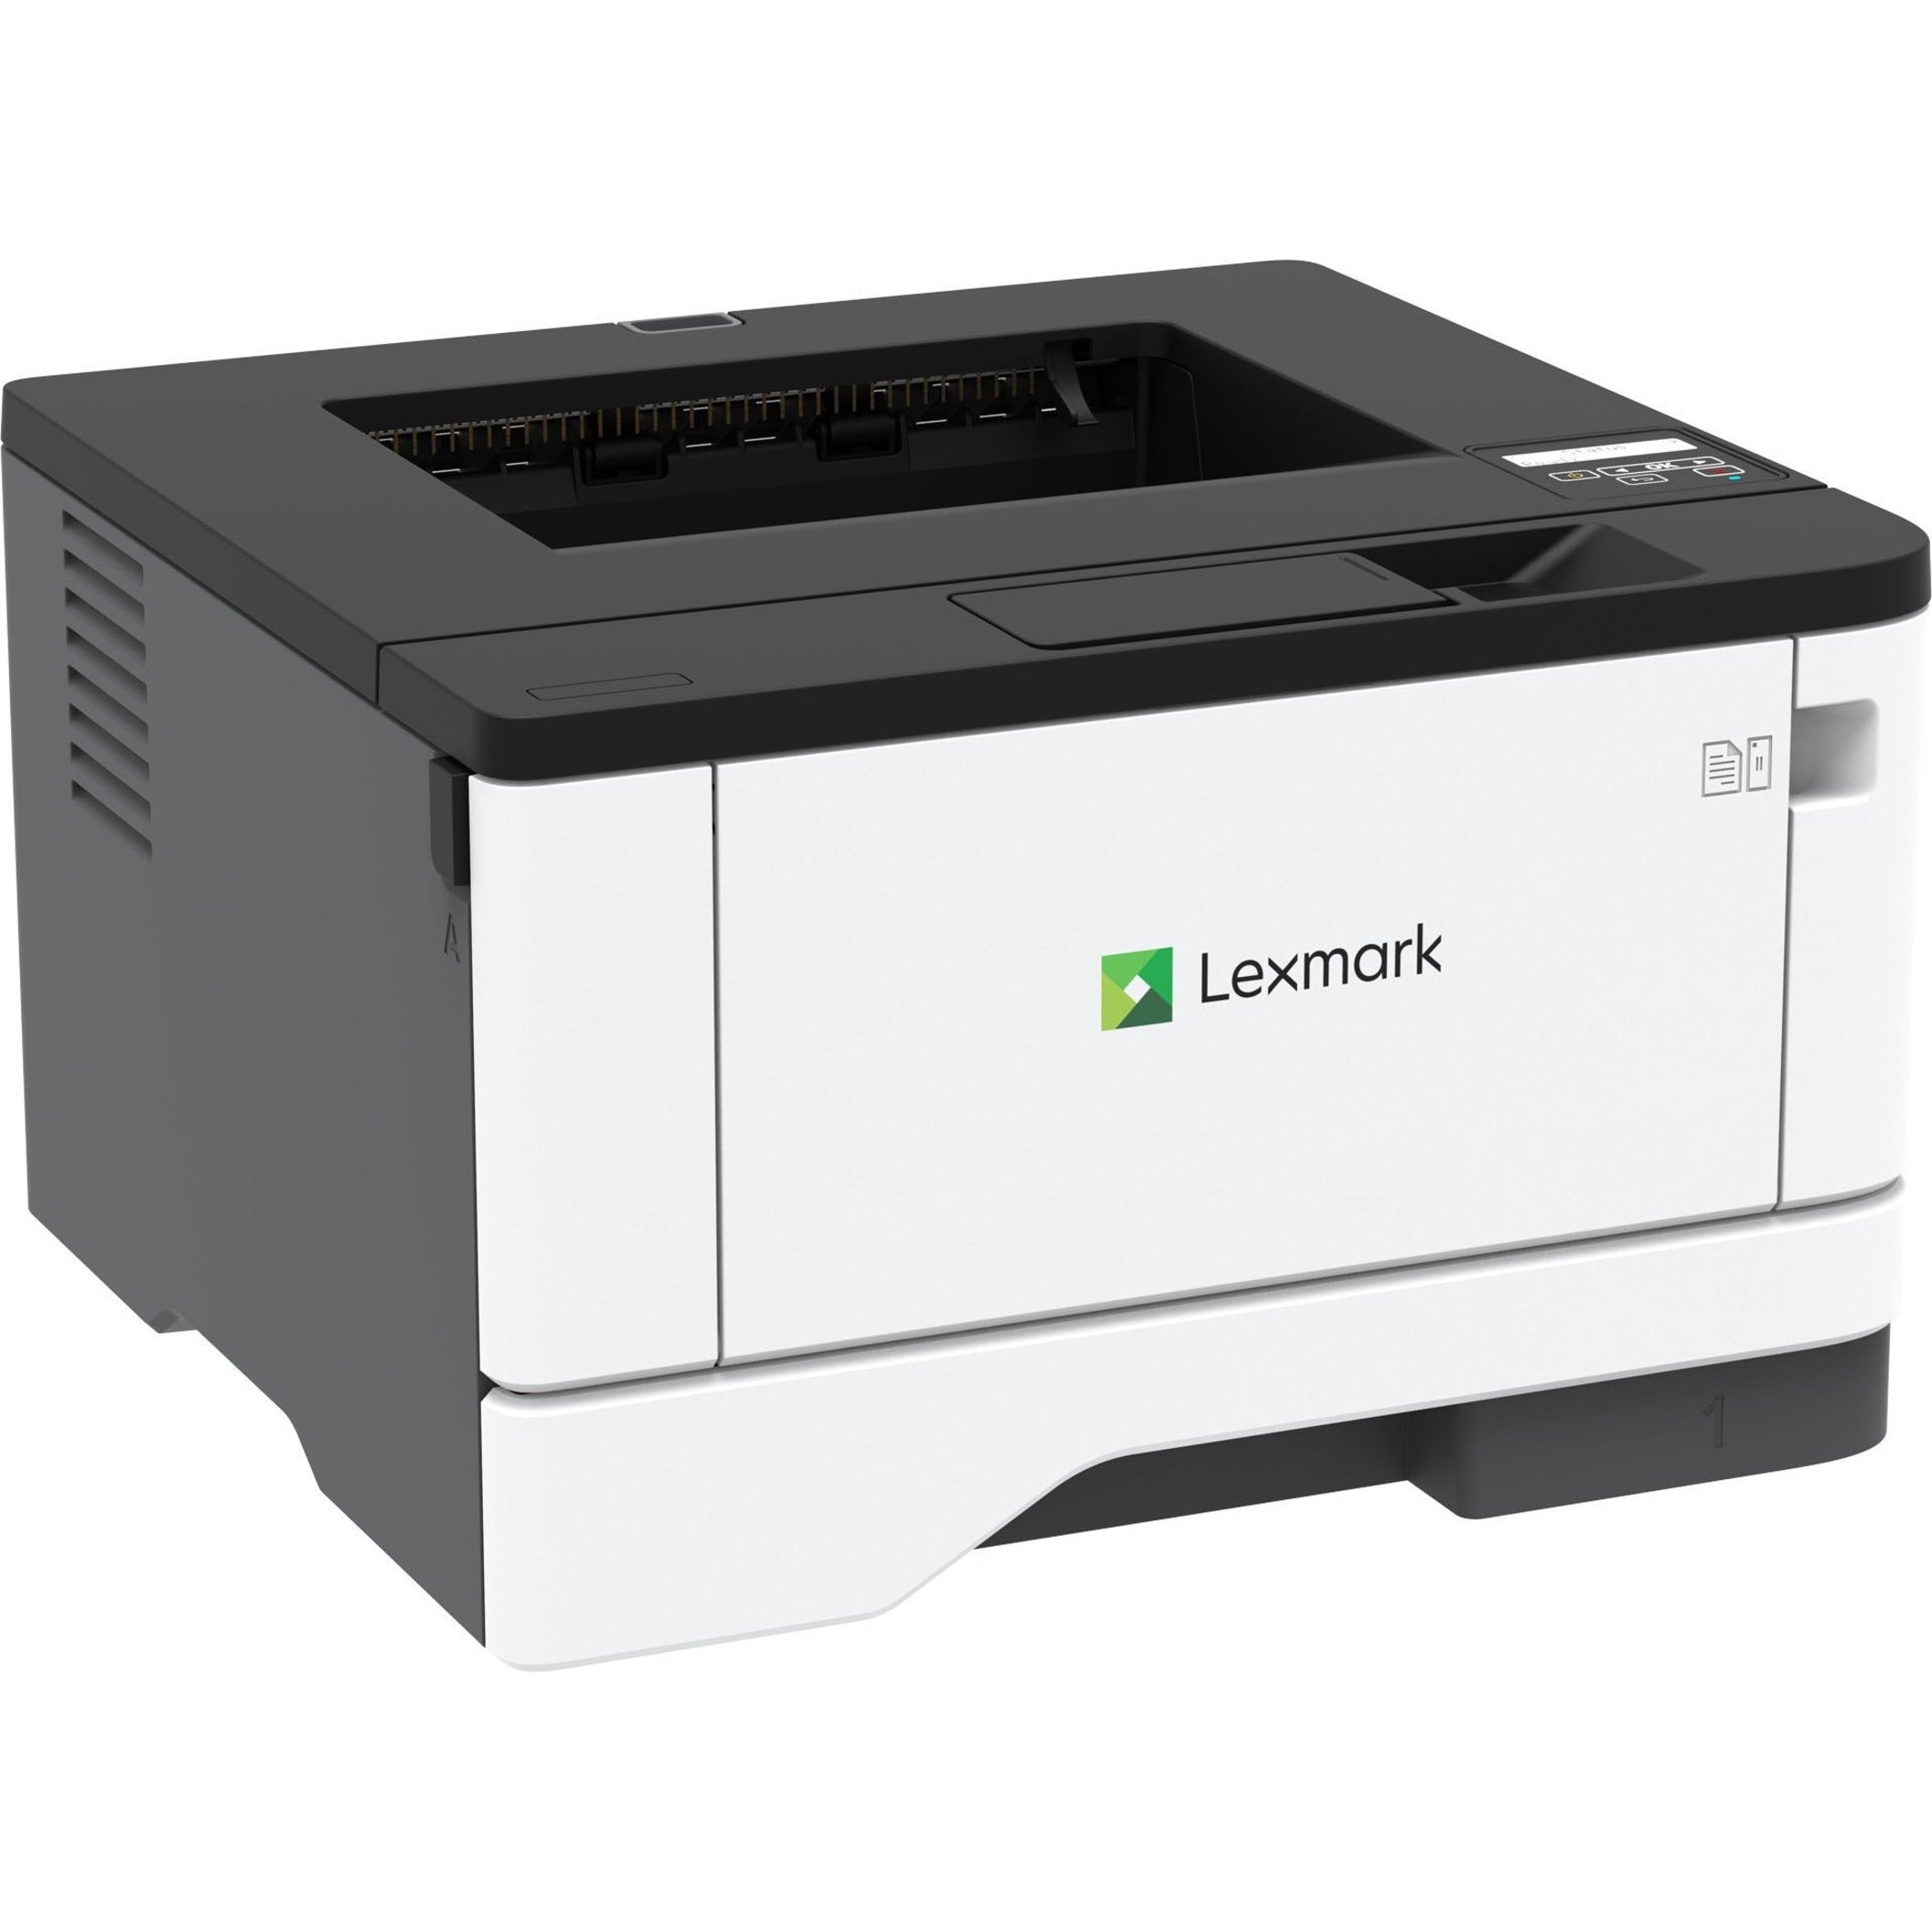 Lexmark 29S0802 MS331dn Desktop Wired Laser Printer, Monochrome, 40 ppm, 2400 x 600 dpi